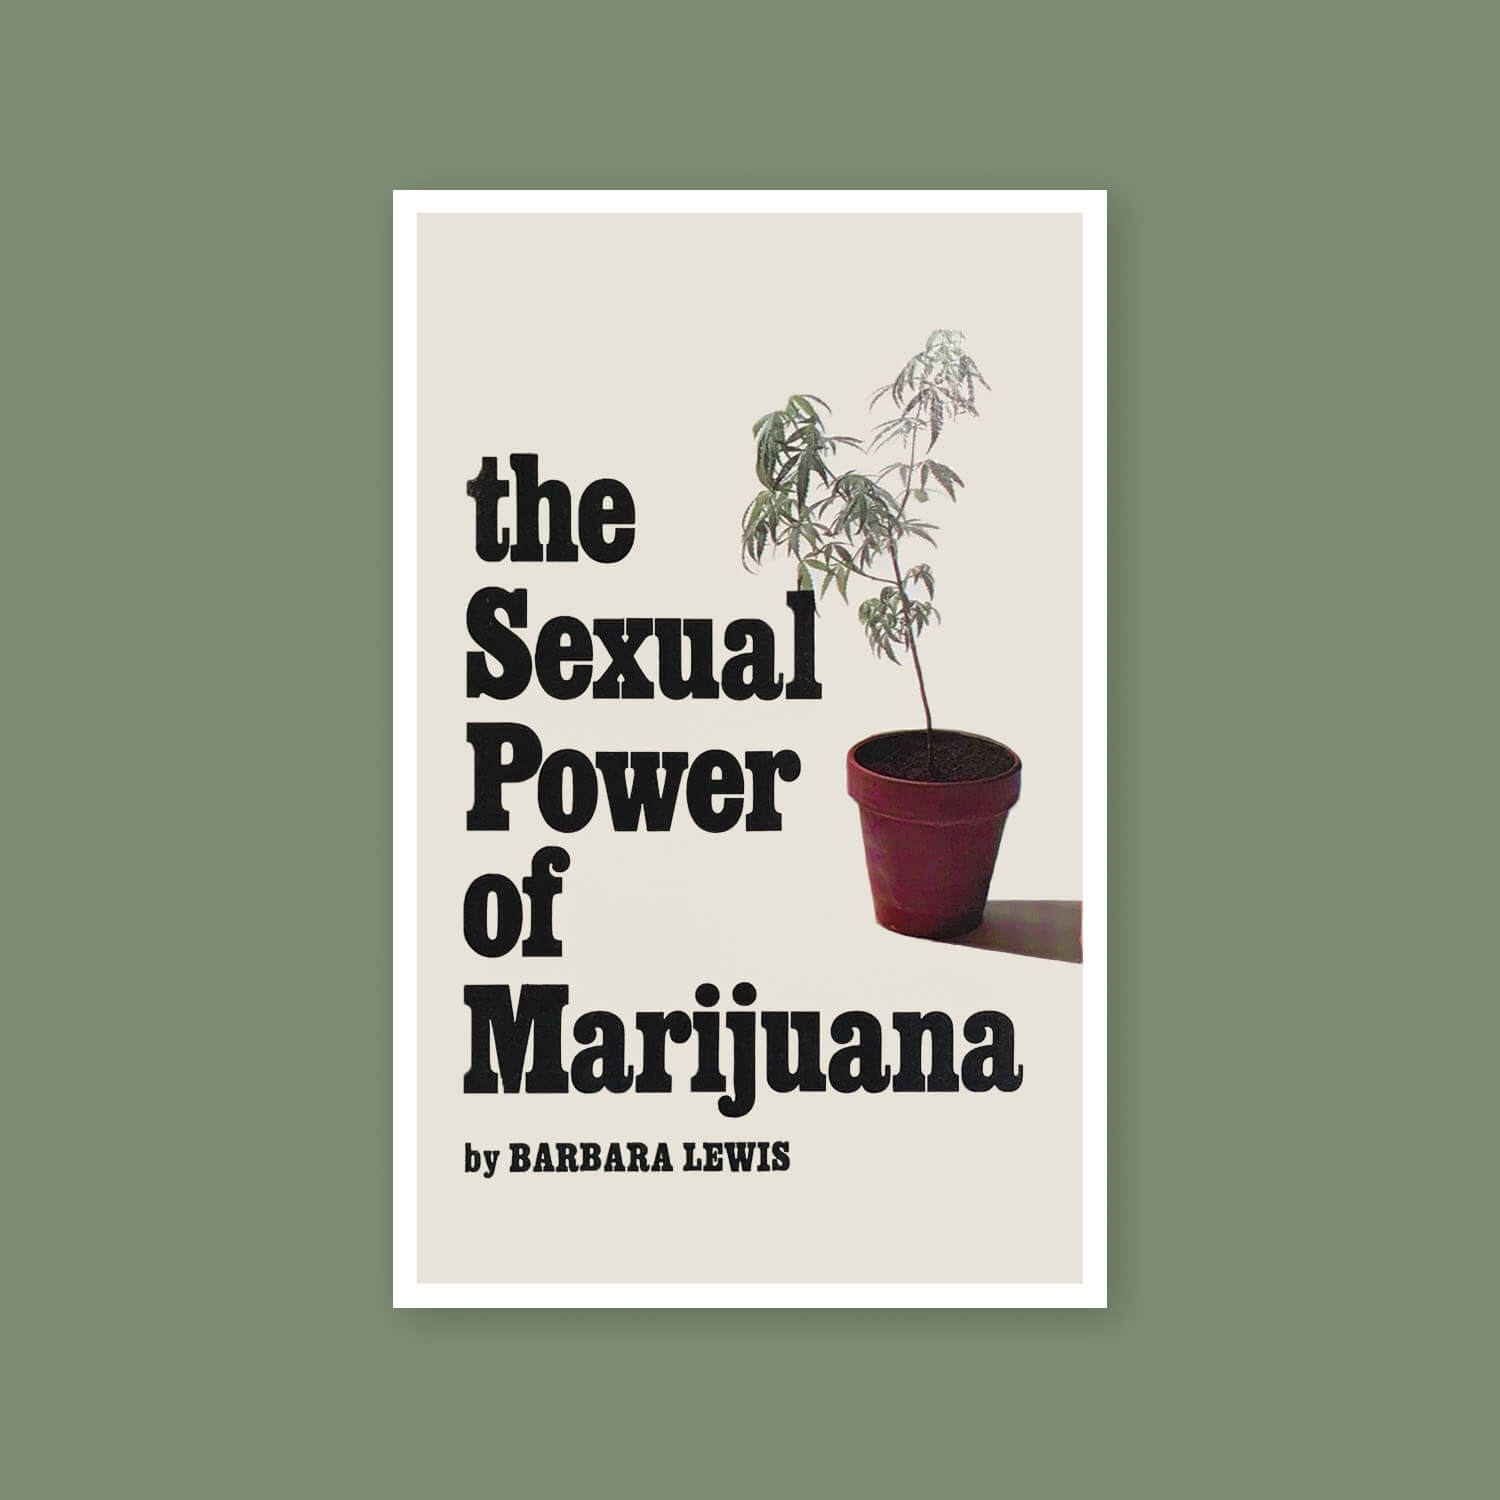 The Sexual Power of Marijuana